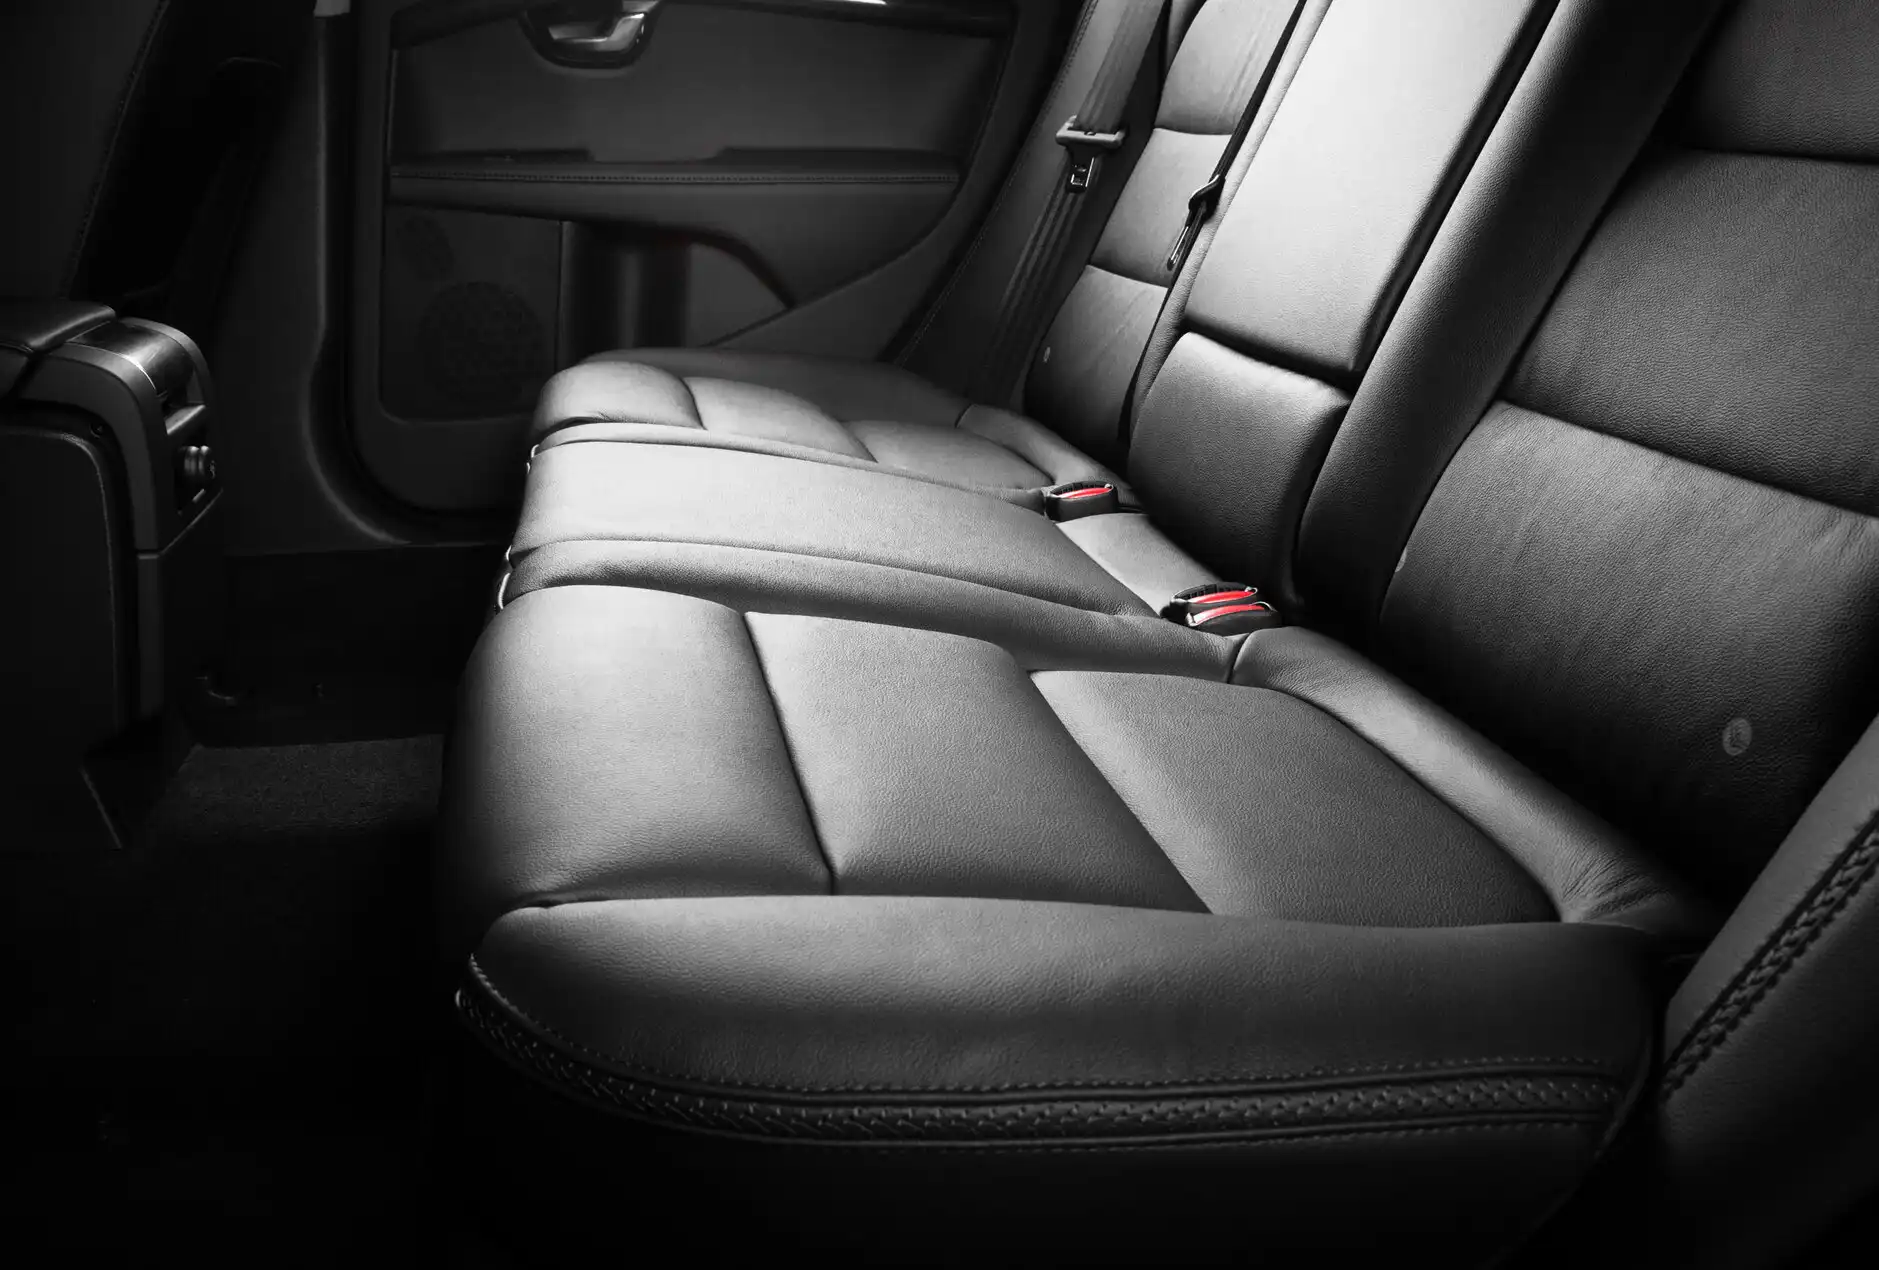 Shiny black leather car interior.